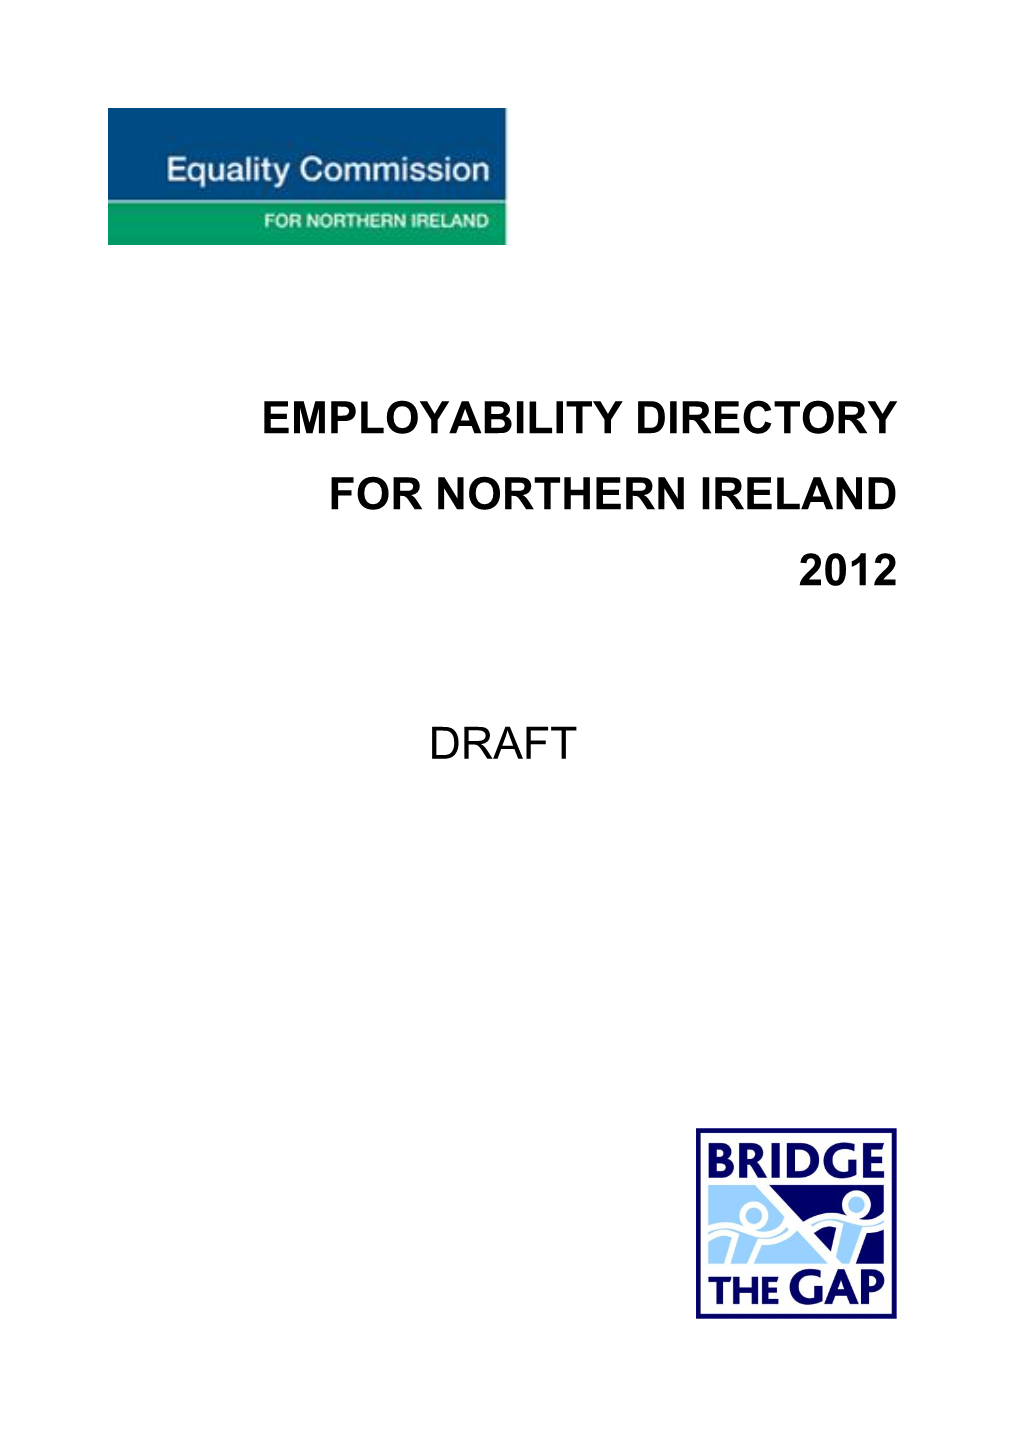 Employability Directory for Northern Ireland 2012 Draft